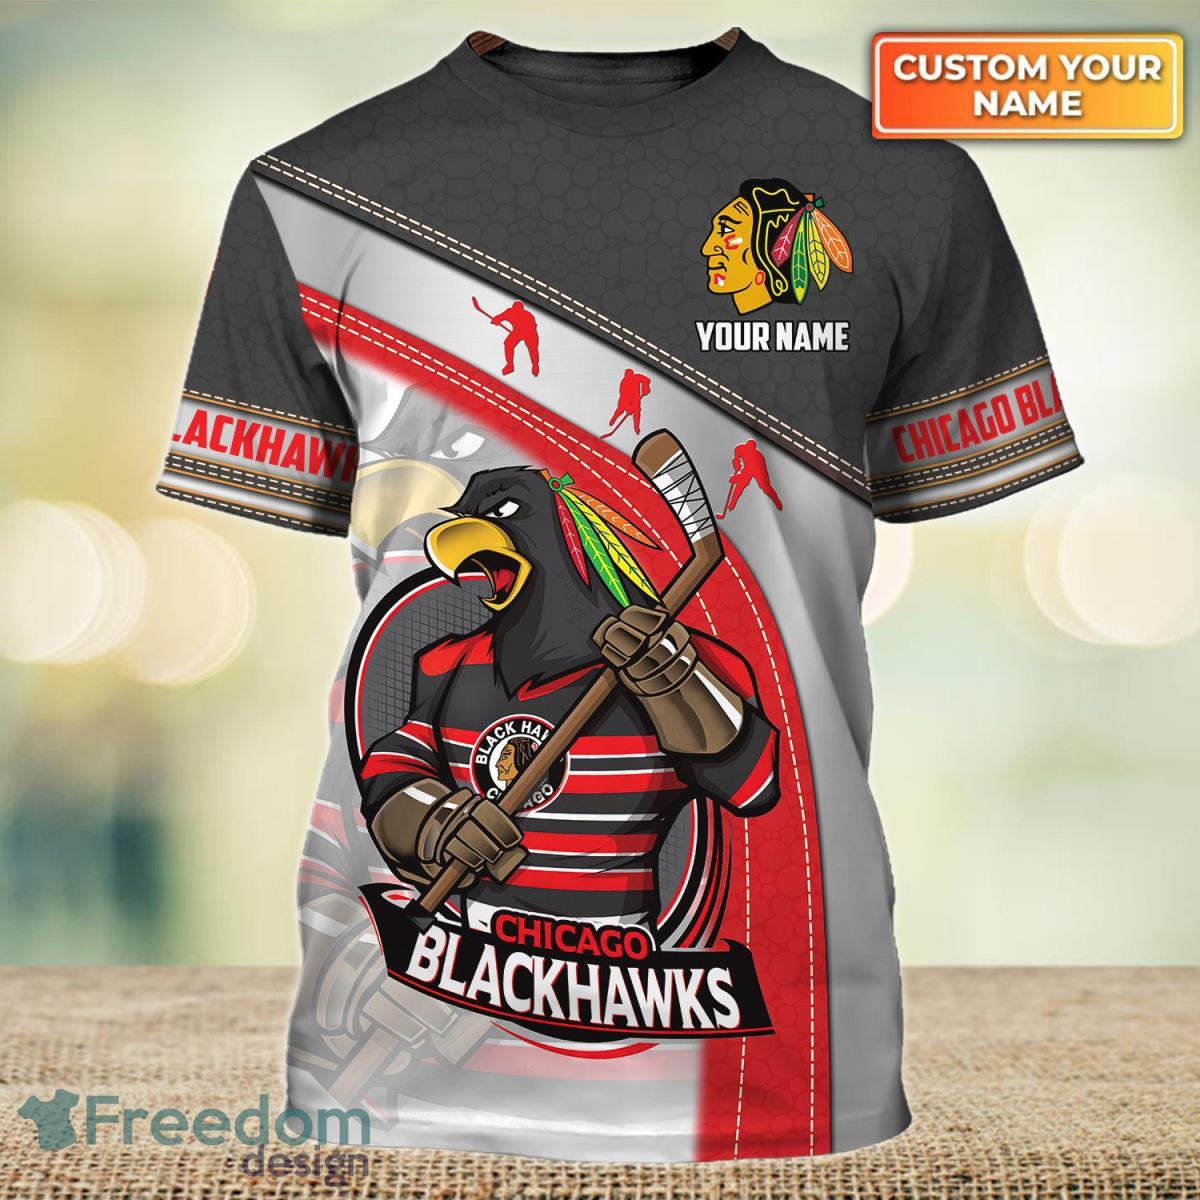 Chicago Blackhawks Personalized Name 3D Tshirt Product Photo 1